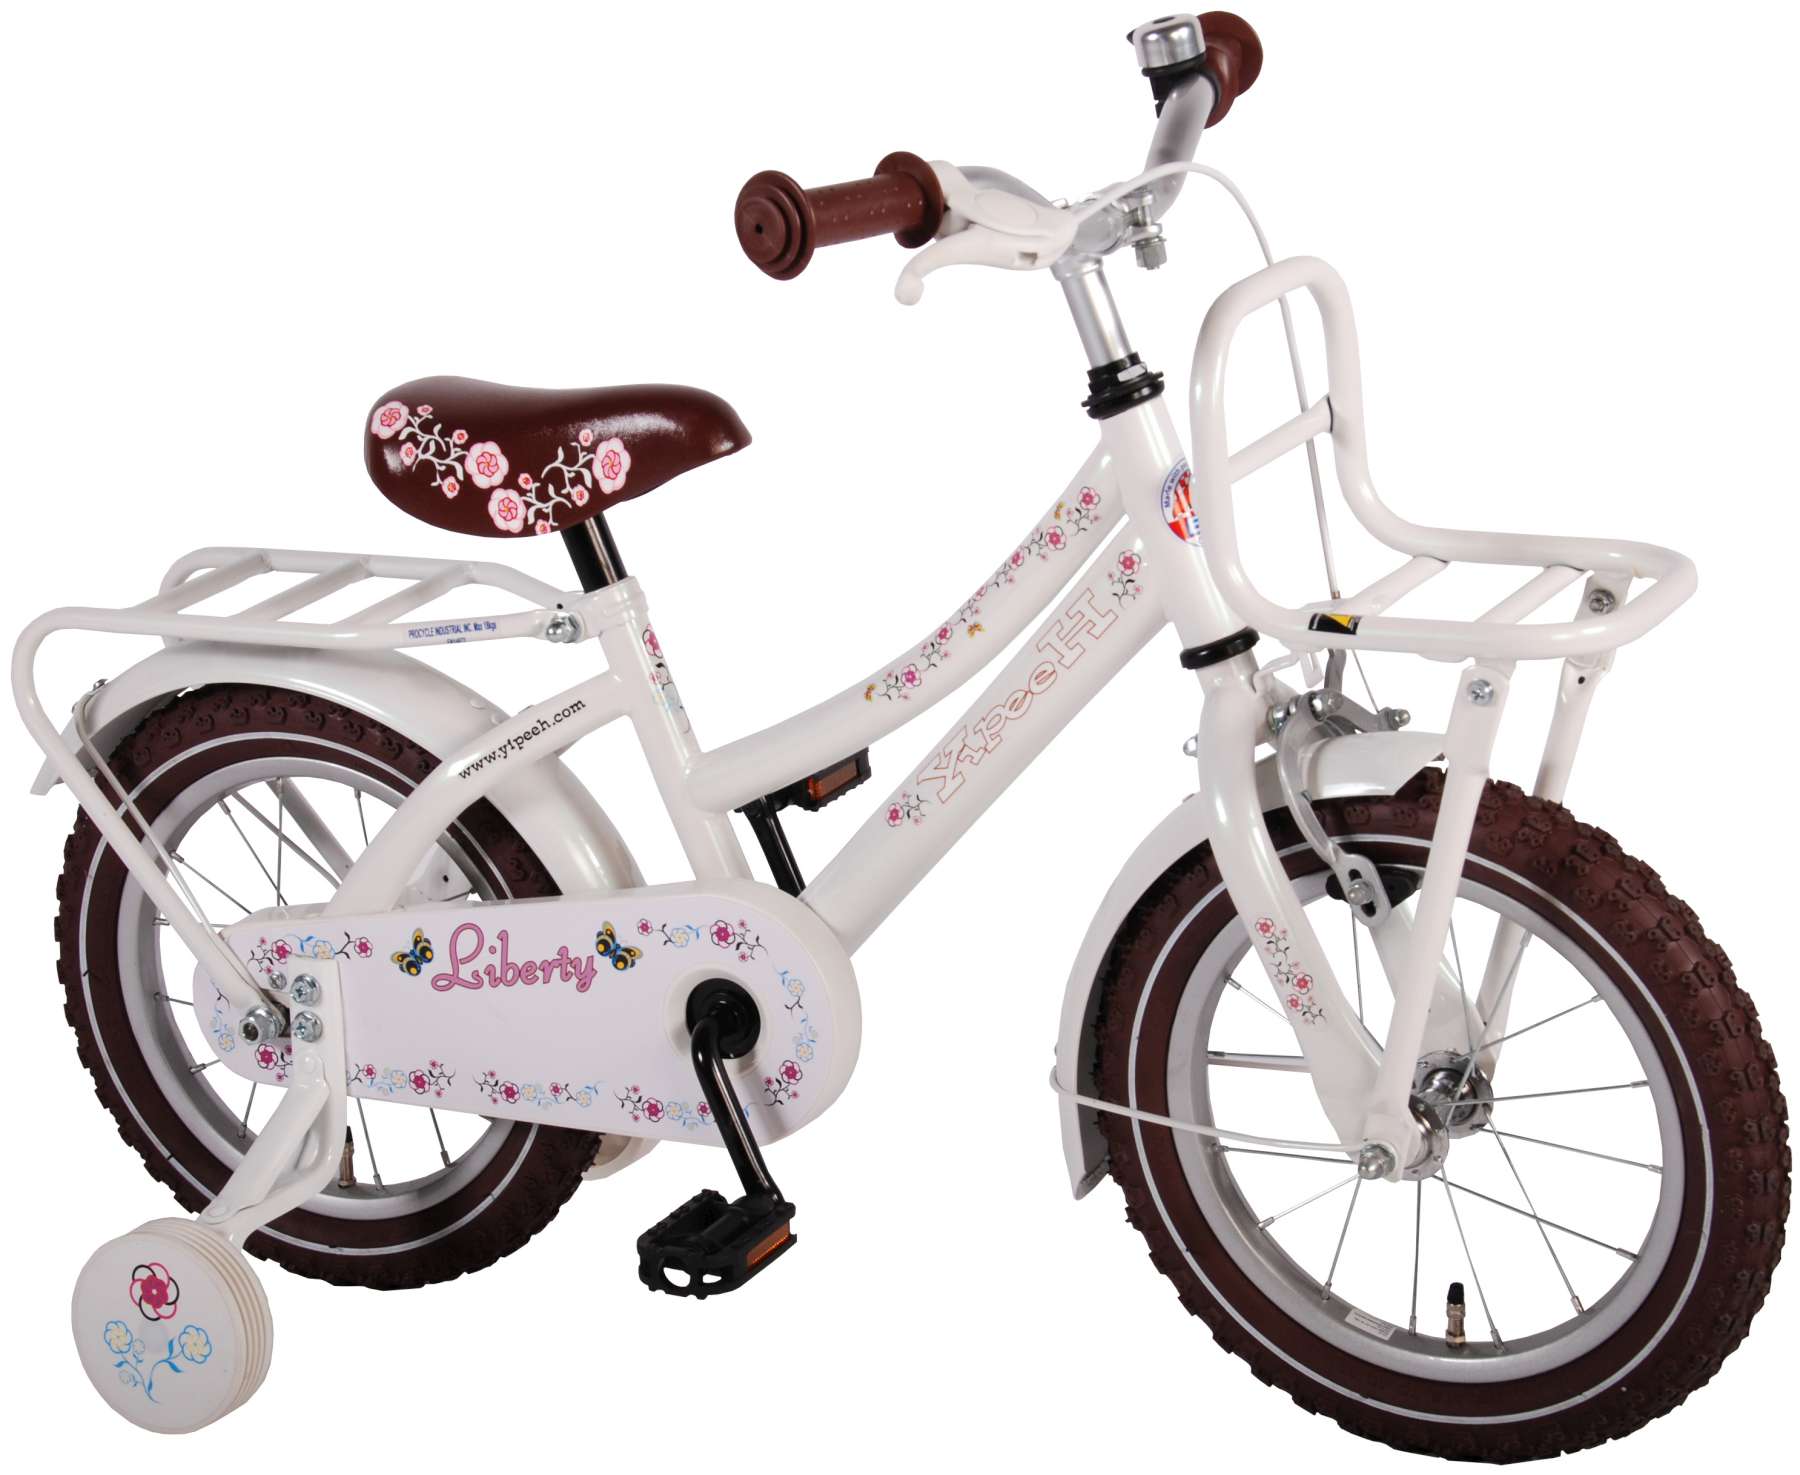 14 inch bike for girl